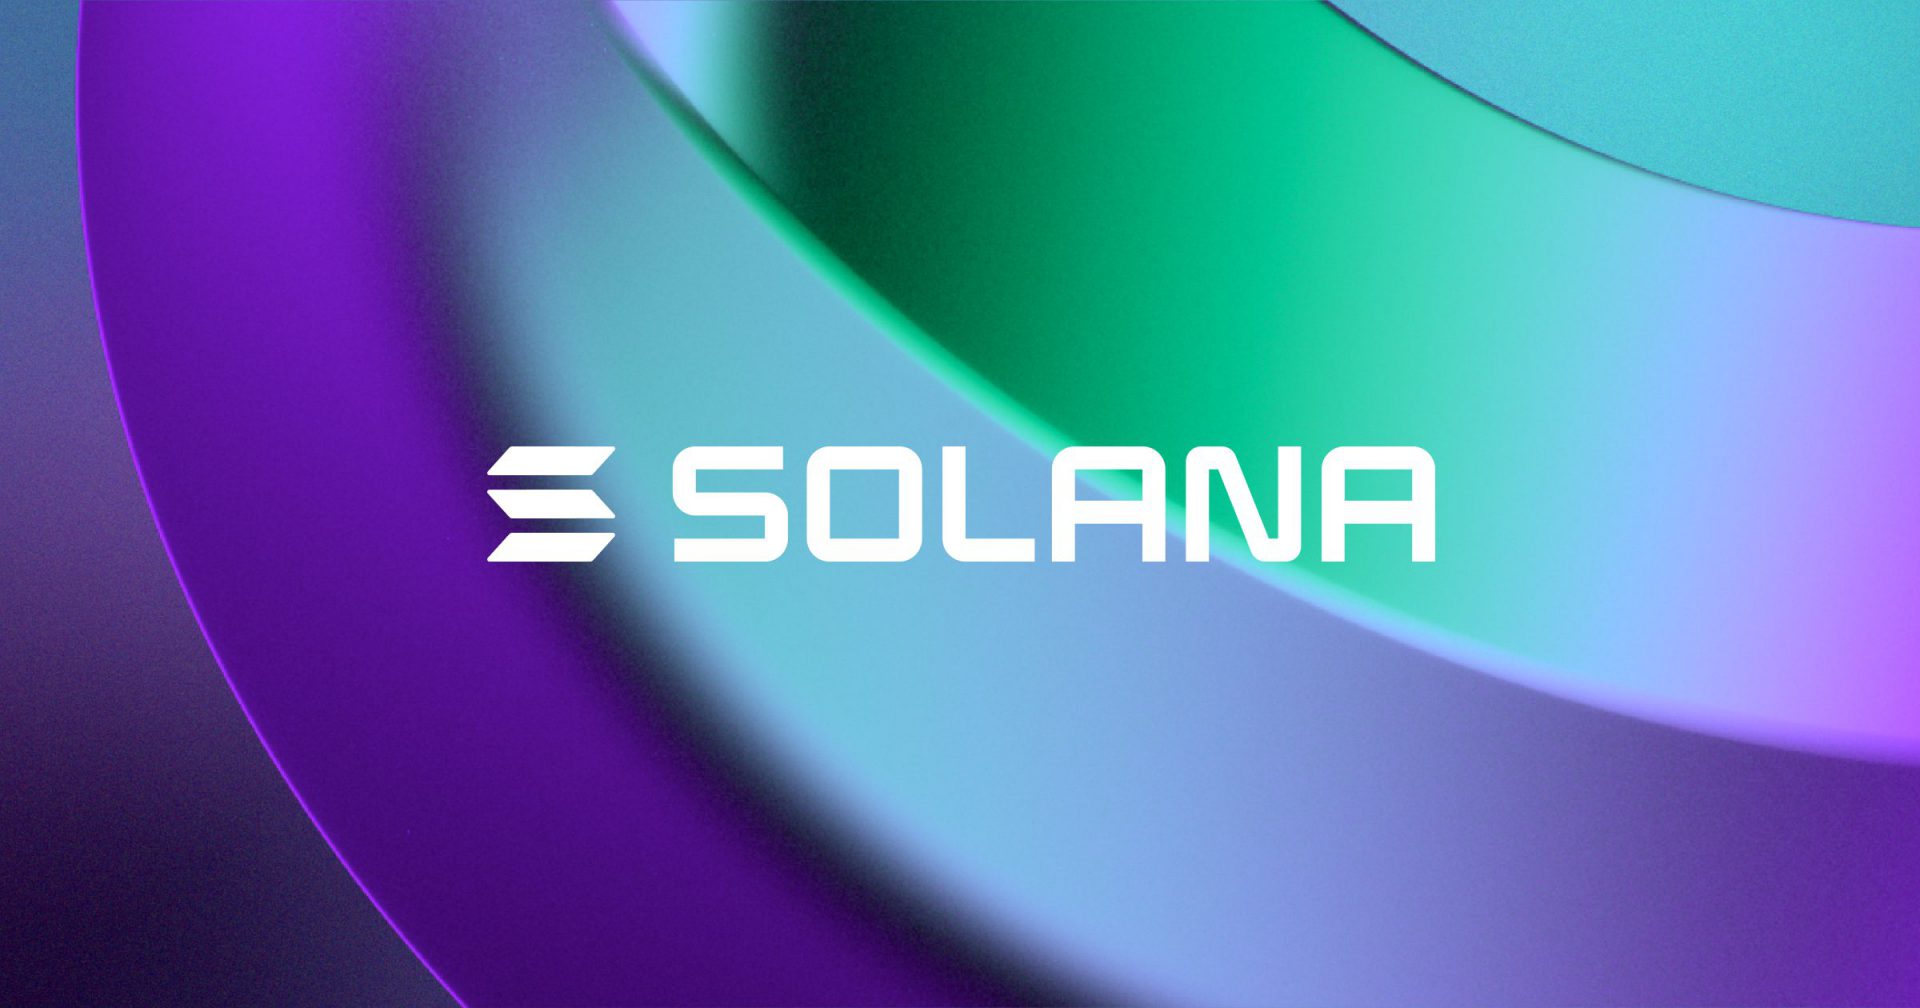 Solana (SOL) 5٪ افزایش یافت زیرا نصف کردن بیت کوین می تواند باعث افزایش به 175 دلار شود